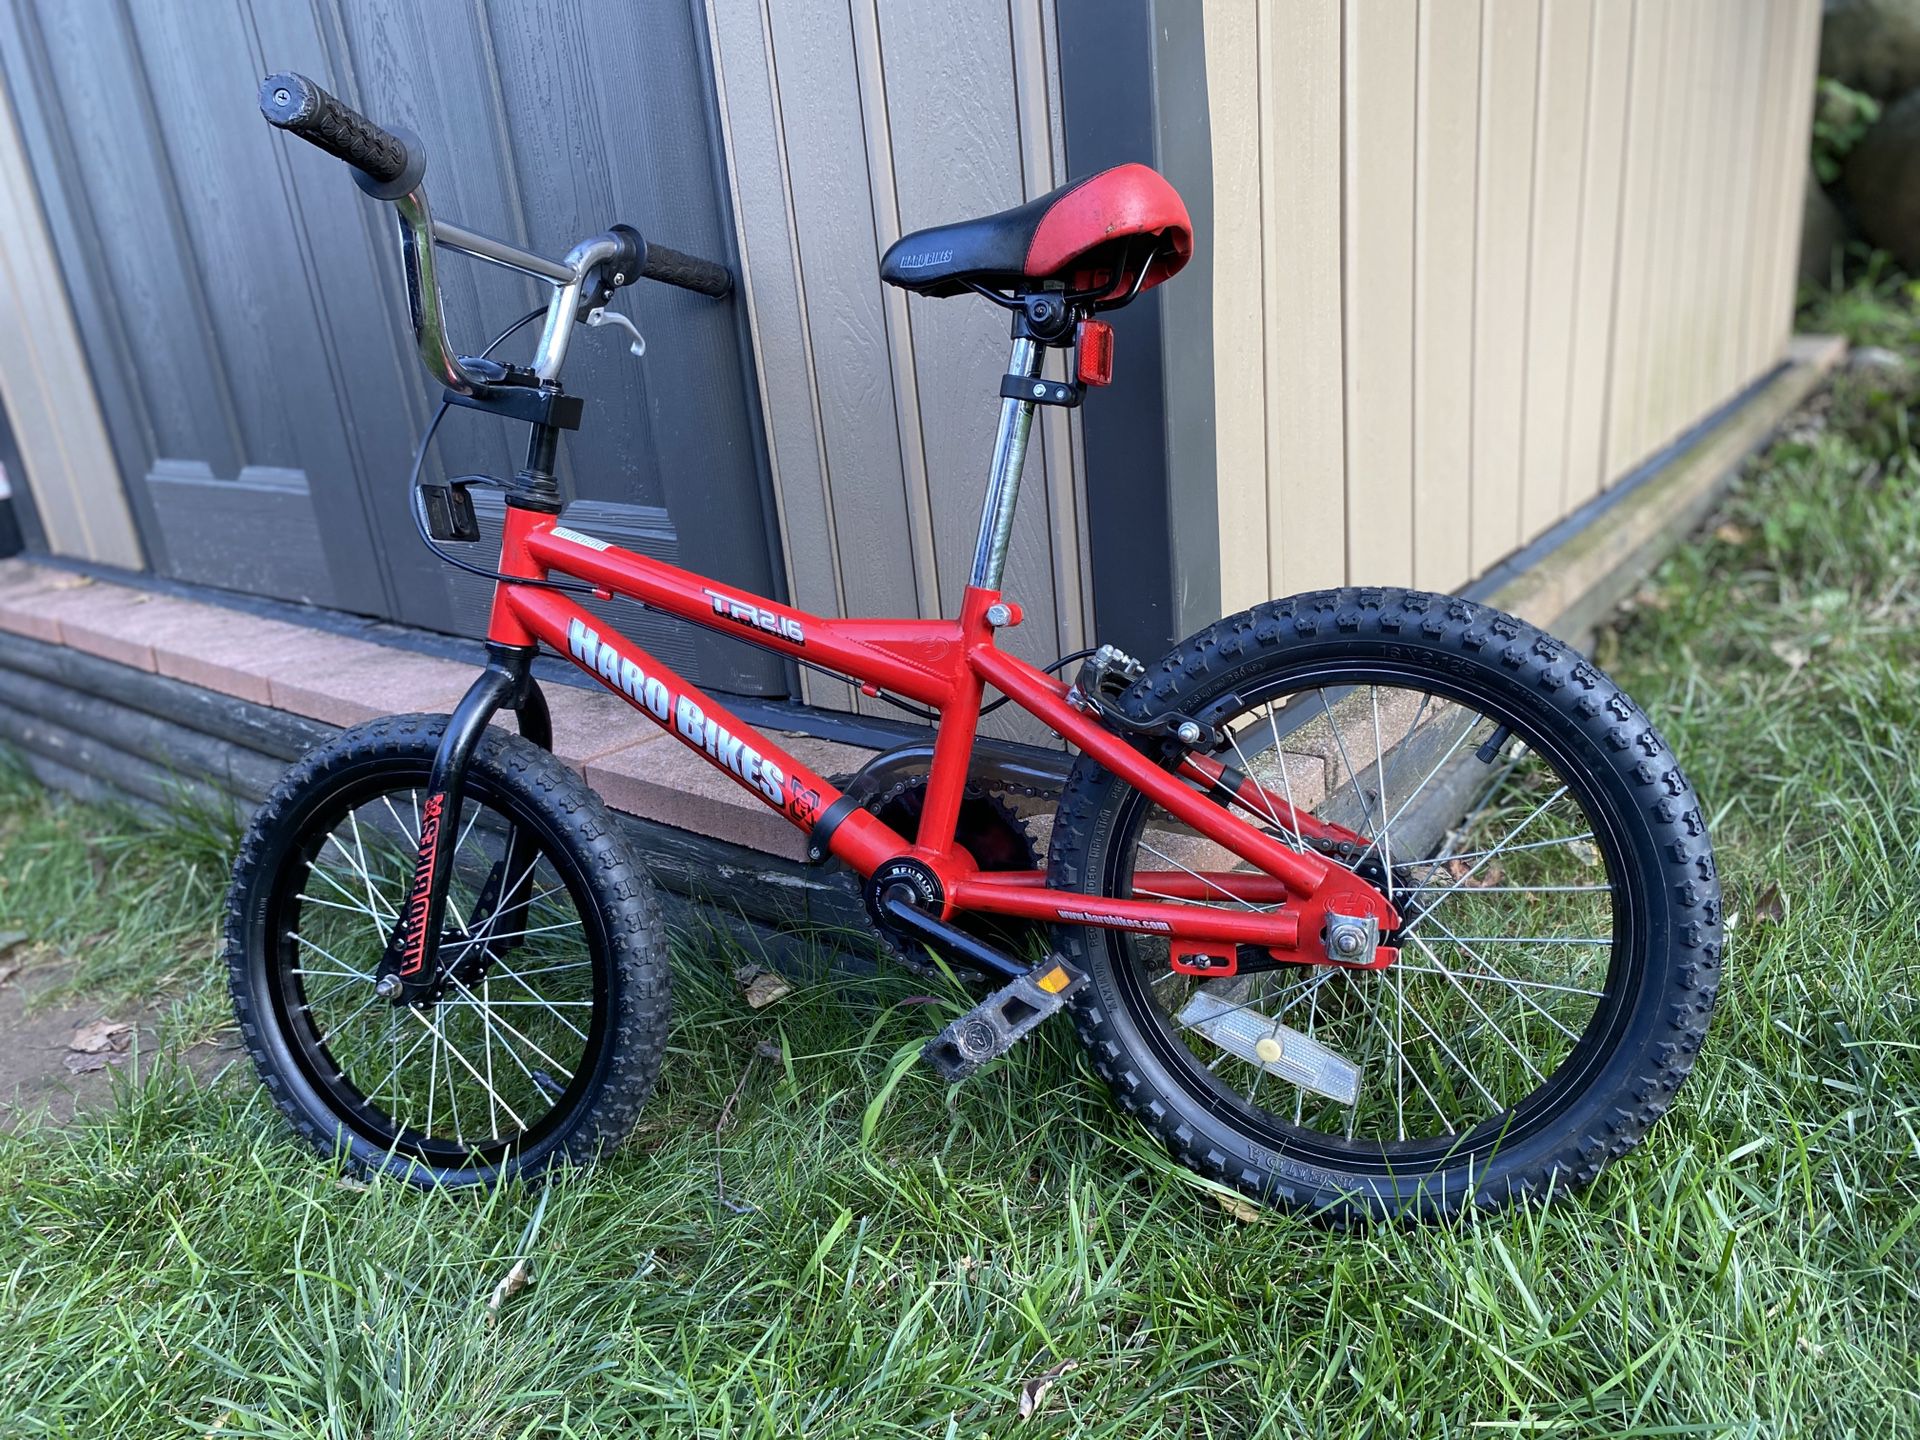 Kids Haro bmx style bike with 16” tires & coaster brakes, barely used!